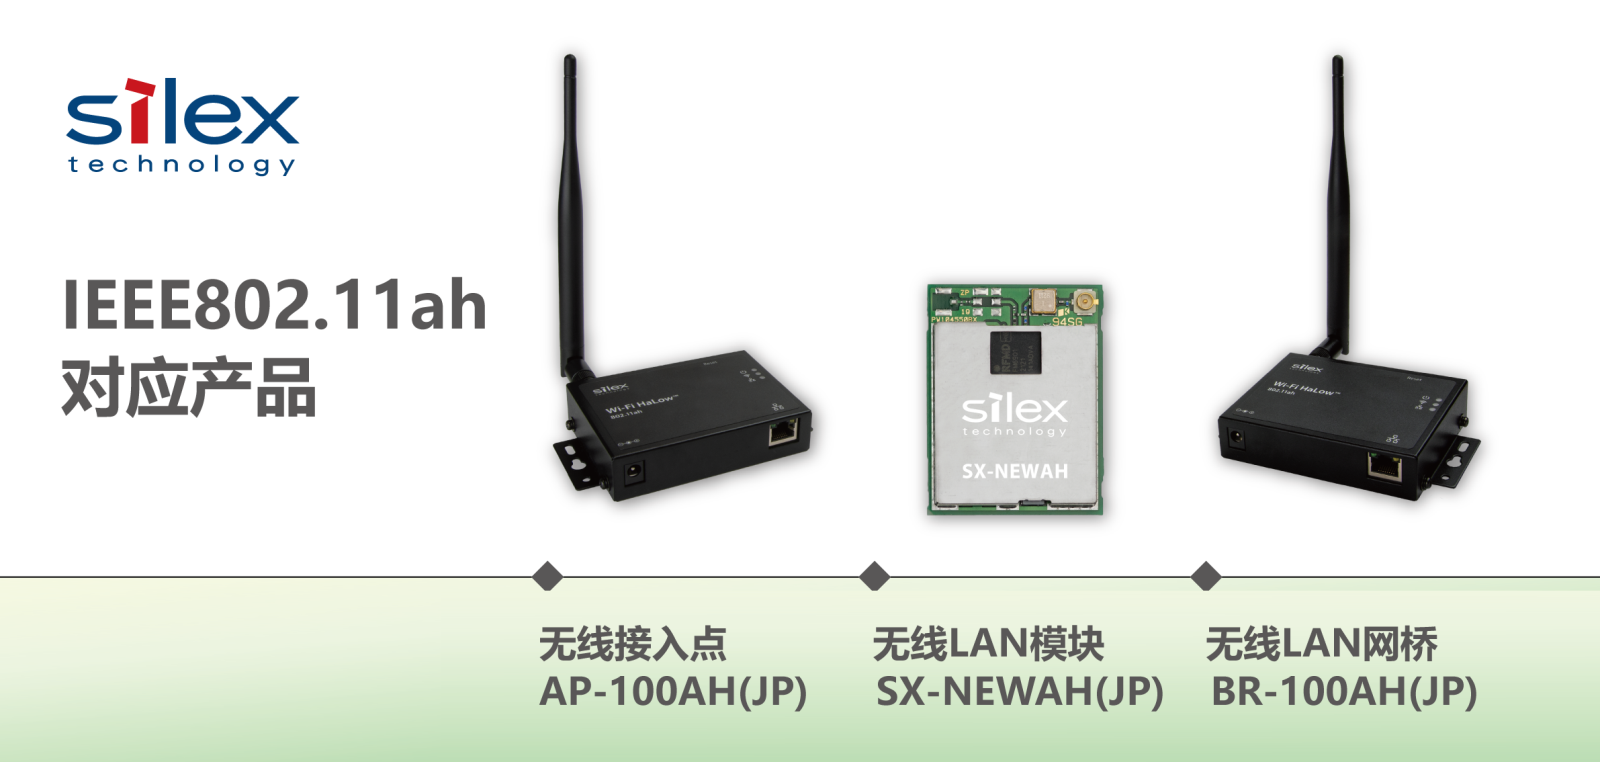 IEEE 802.11ah(Wi-Fi HaLow) 对应产品